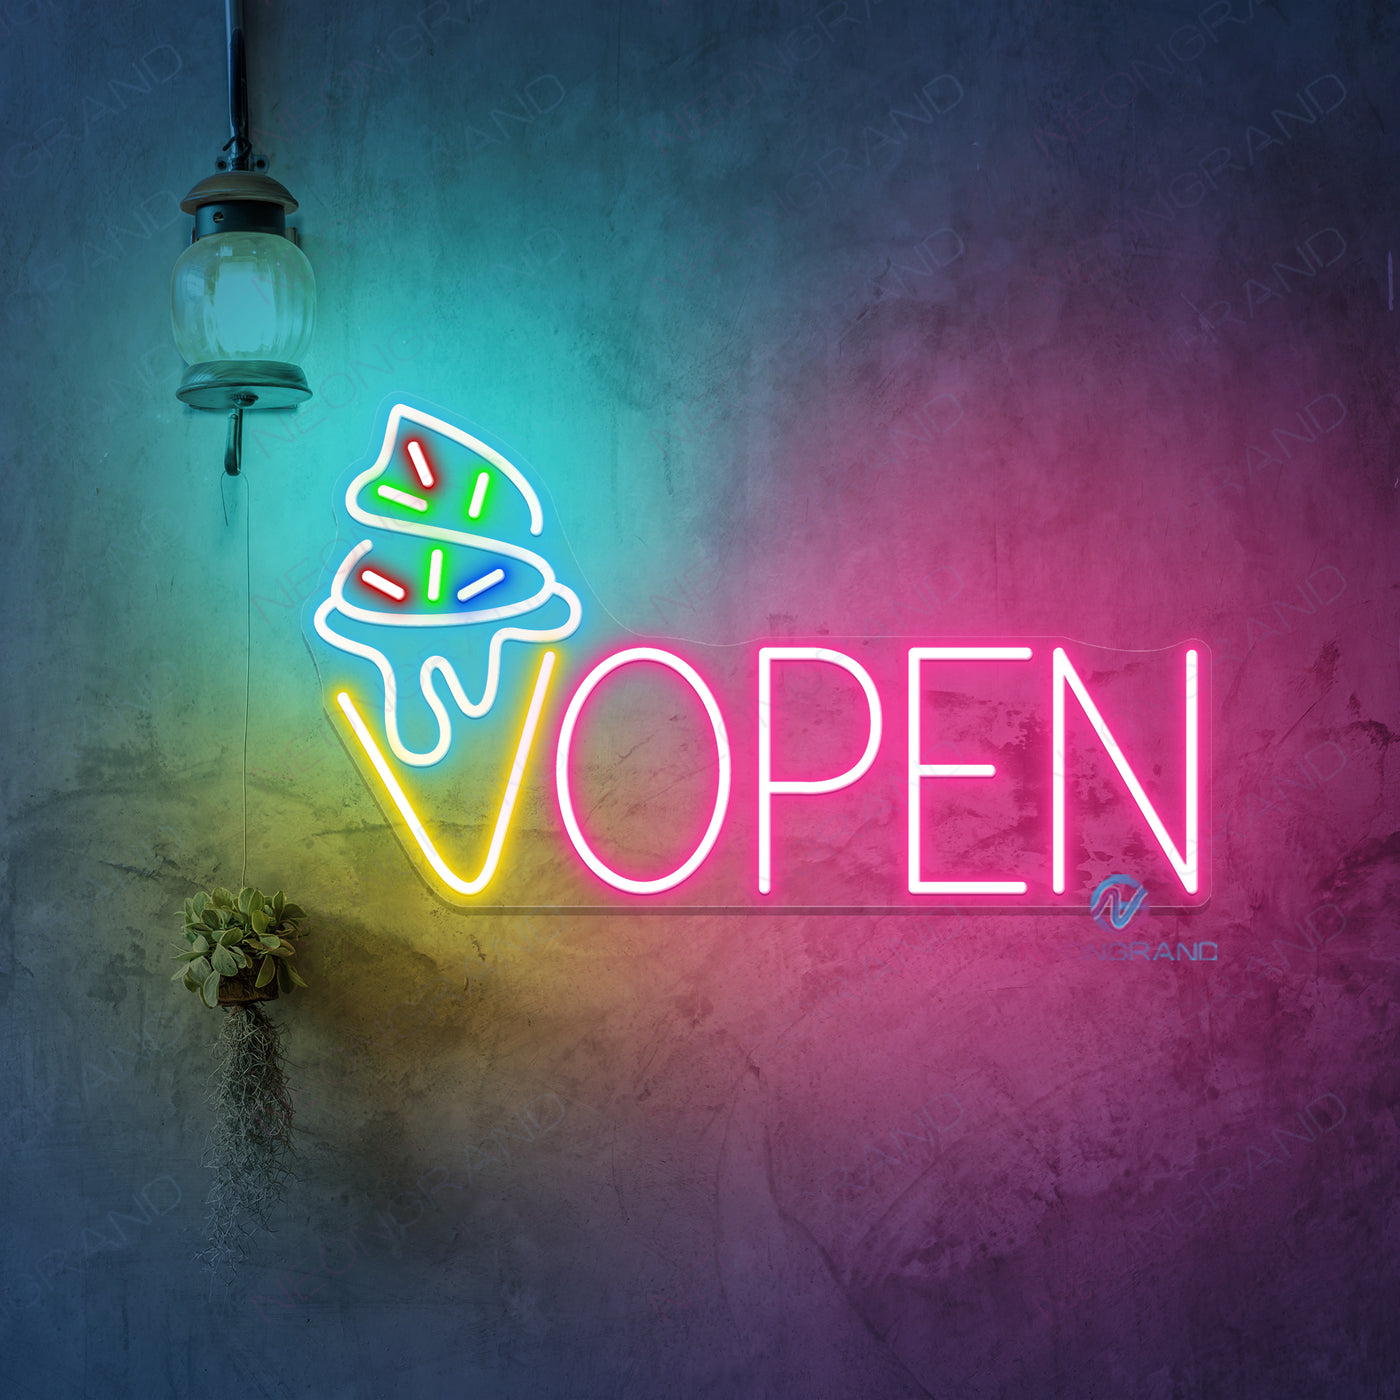 Ice Cream Open Neon Sign Business Led Light